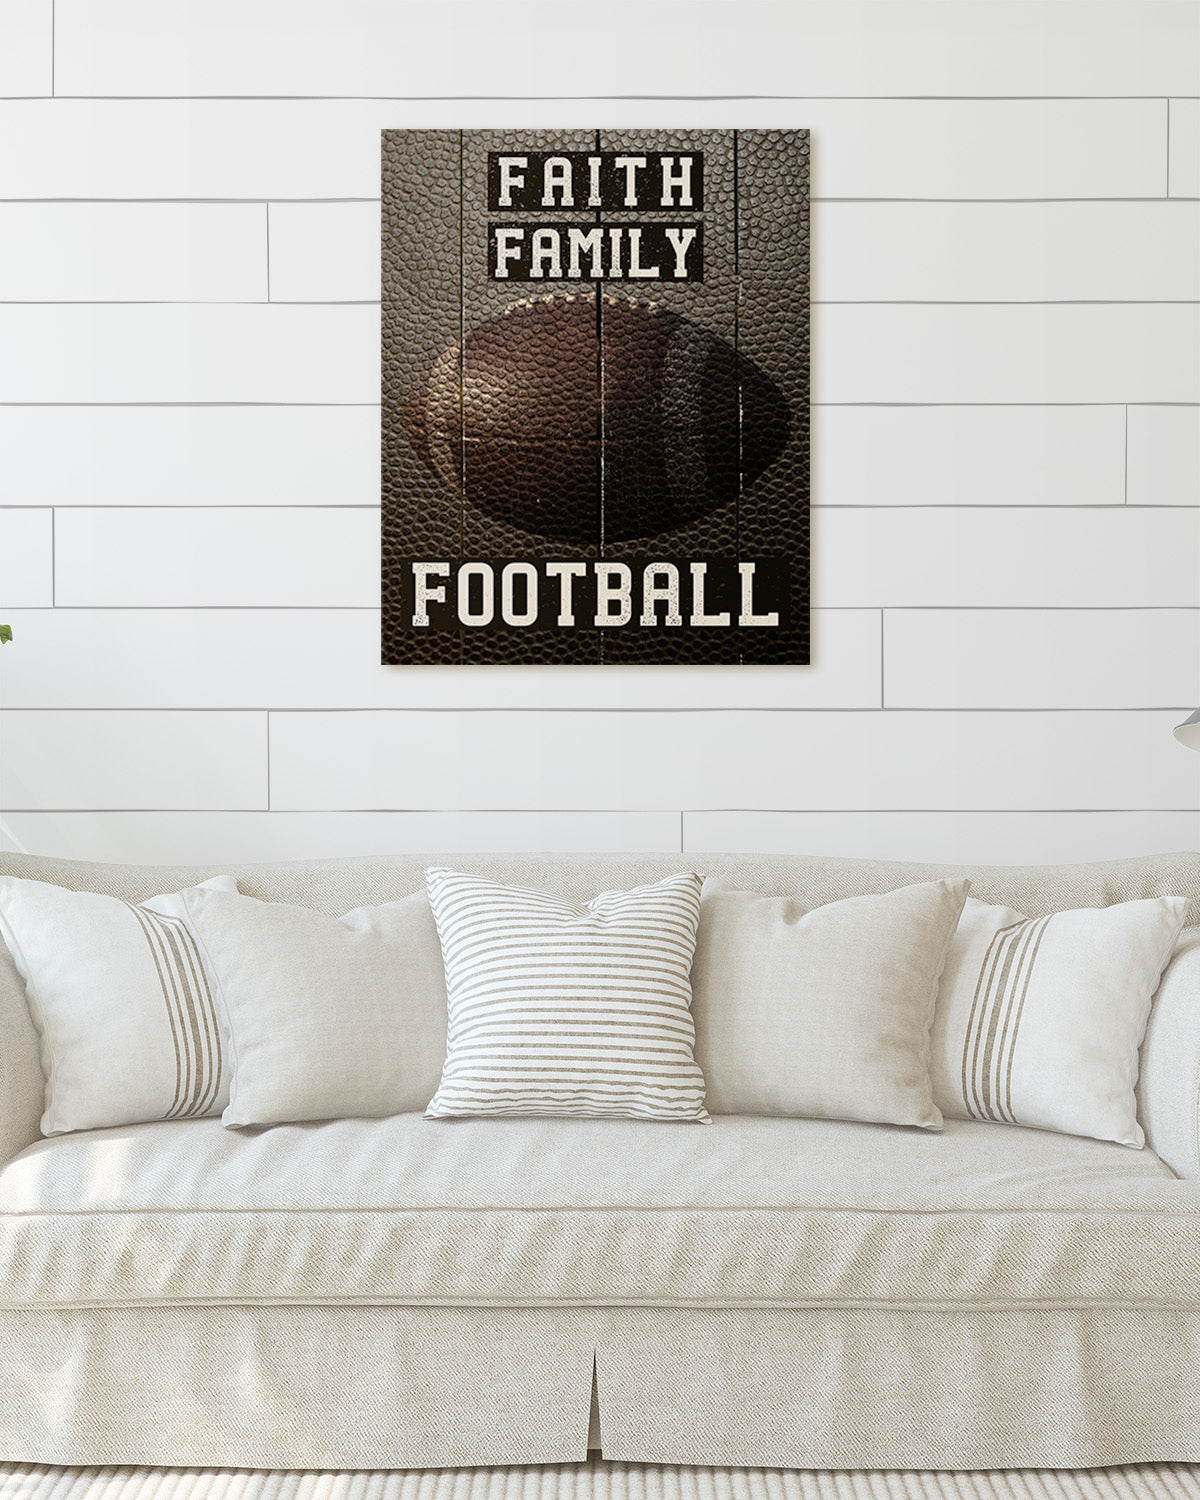 Faith Family Football Teen Room Decor - Inspirational Wall Art for Boys, Kids Room, Family or Game Room, Man Cave, Den - Home Decor Gift for Sports Fans, Football Players